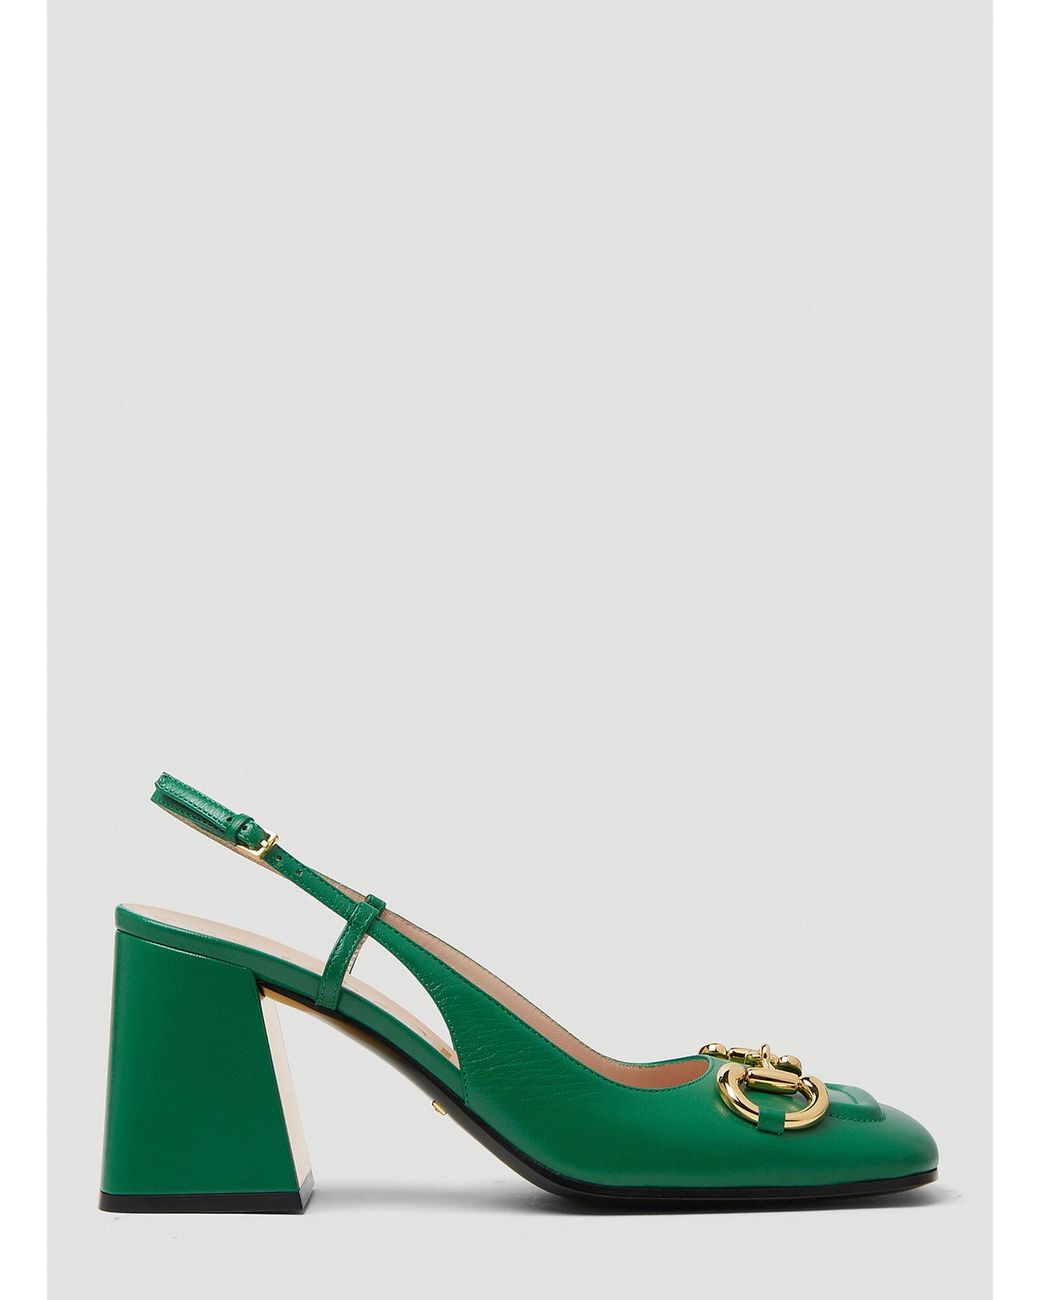 Gucci Horsebit Slingback Heels in Green | Lyst